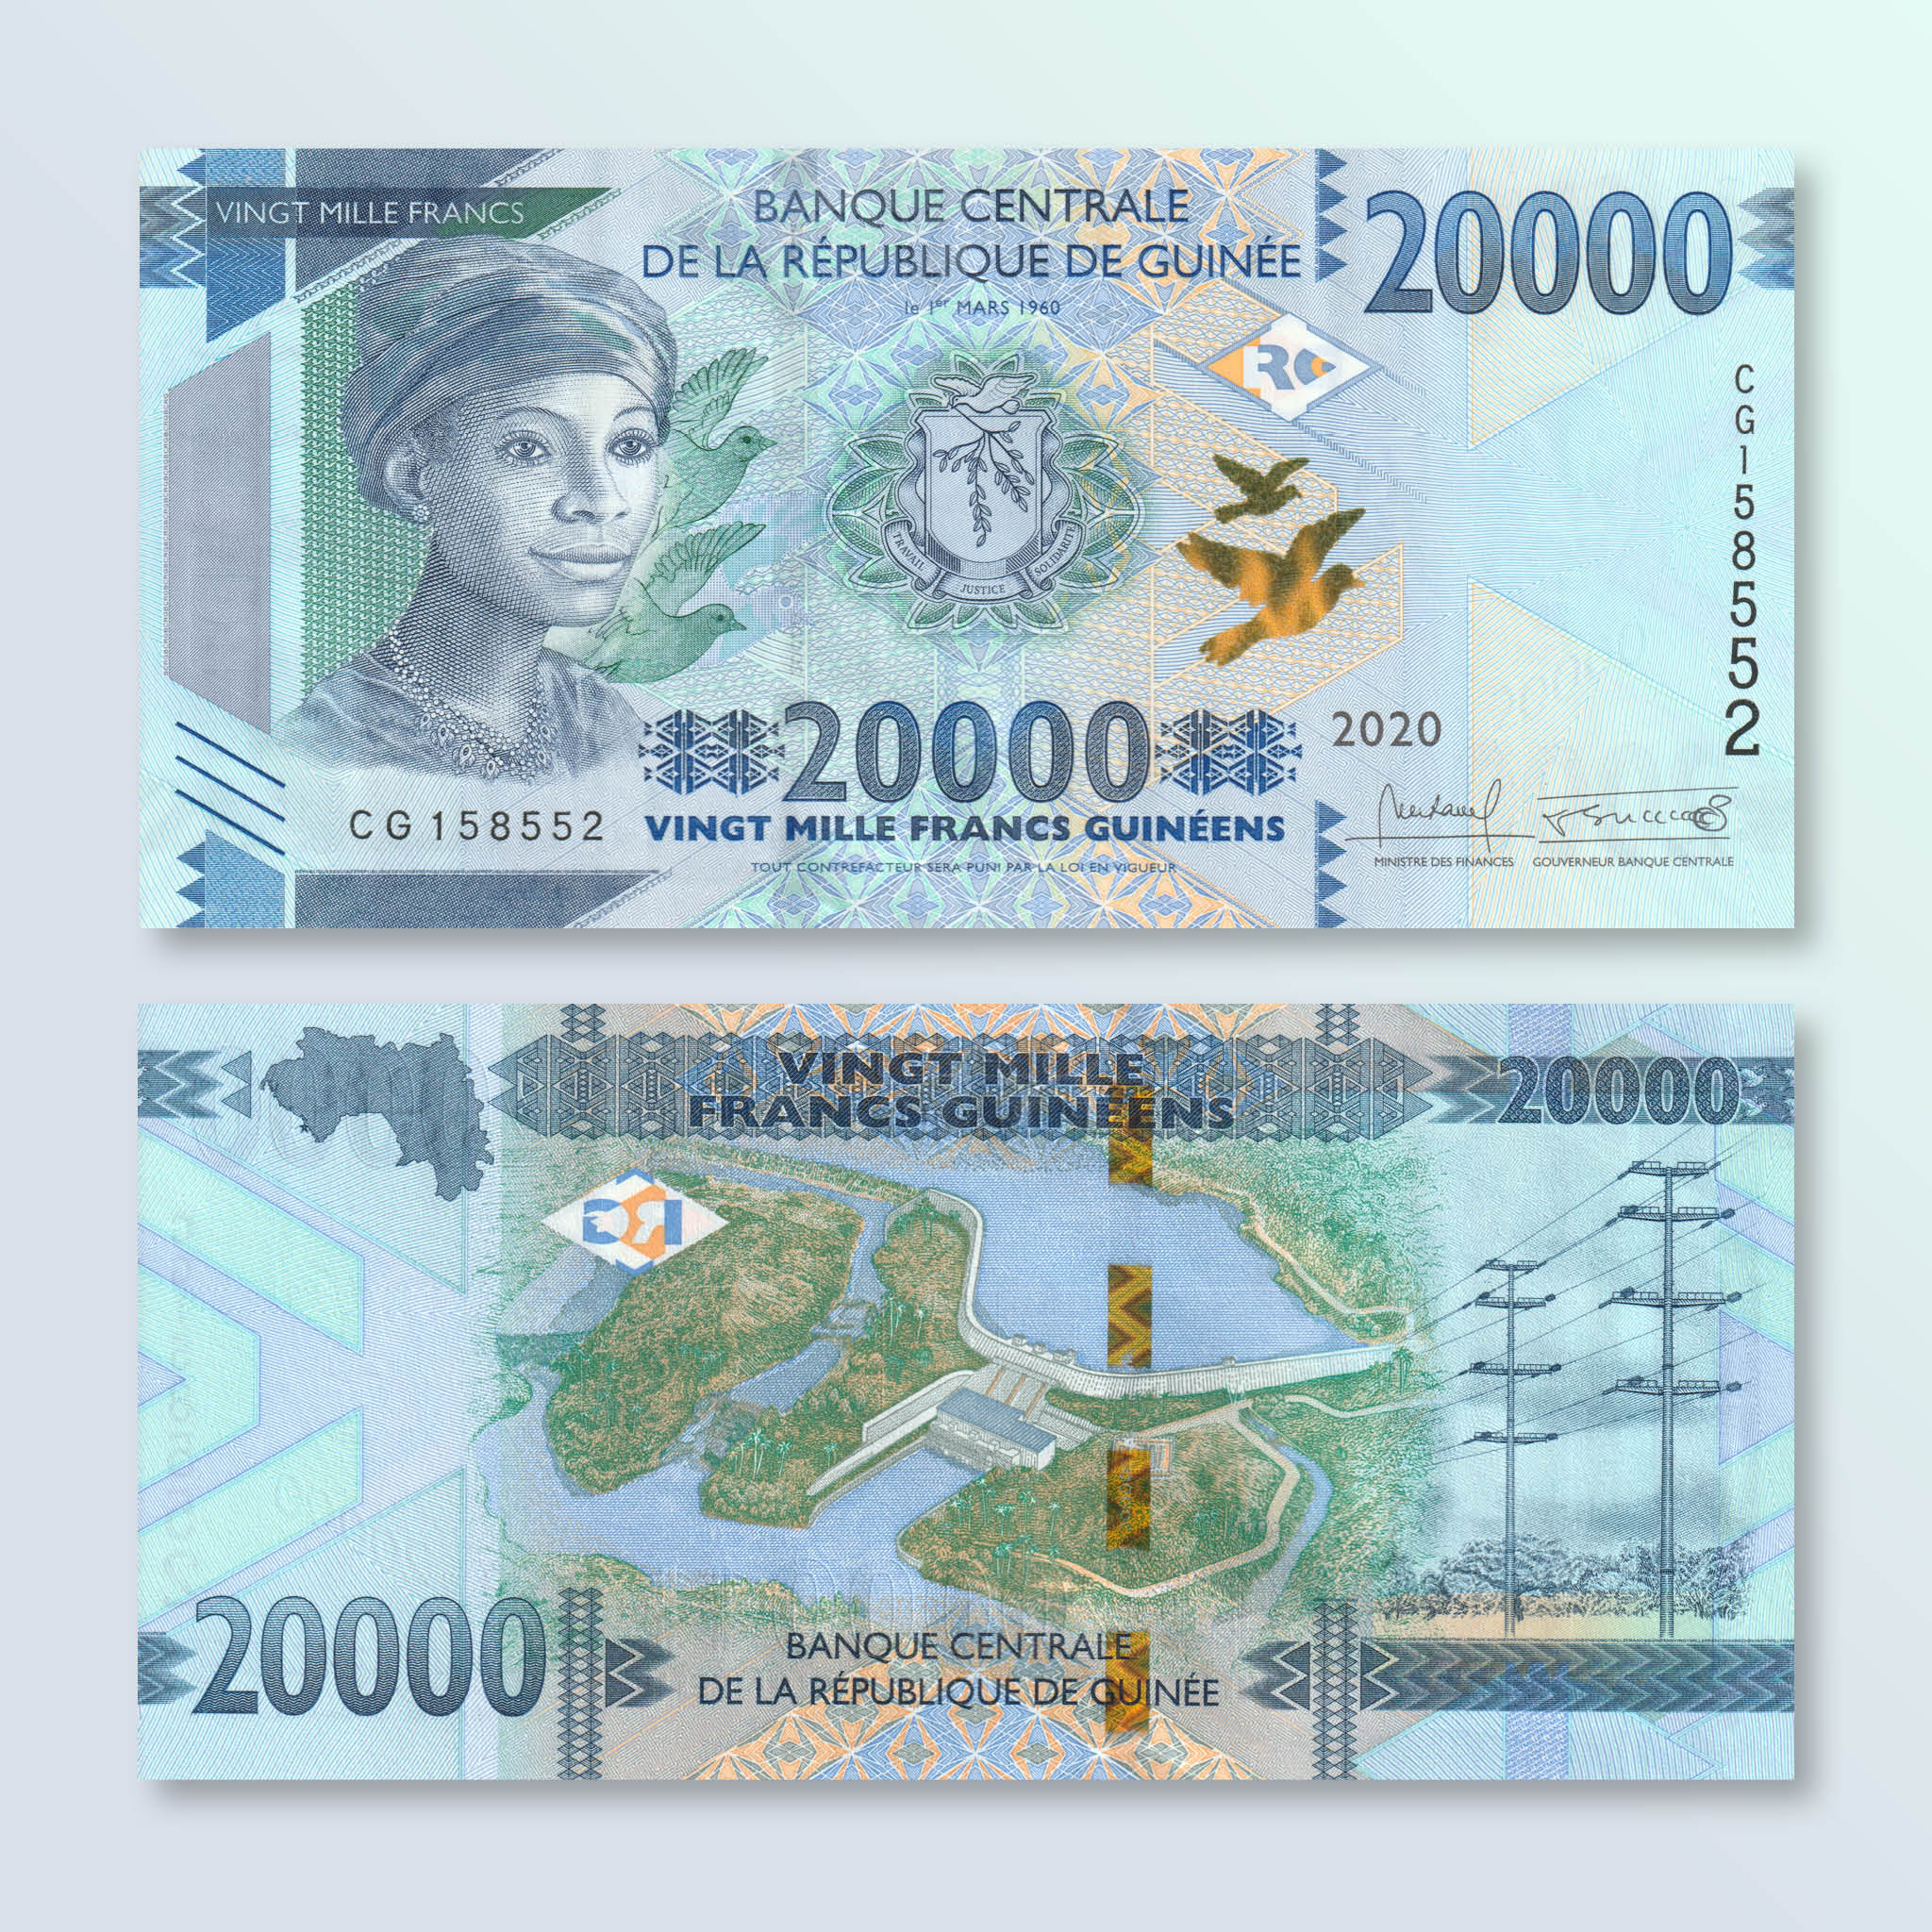 Guinea 20000 Francs, 2020, B344b, UNC - Robert's World Money - World Banknotes